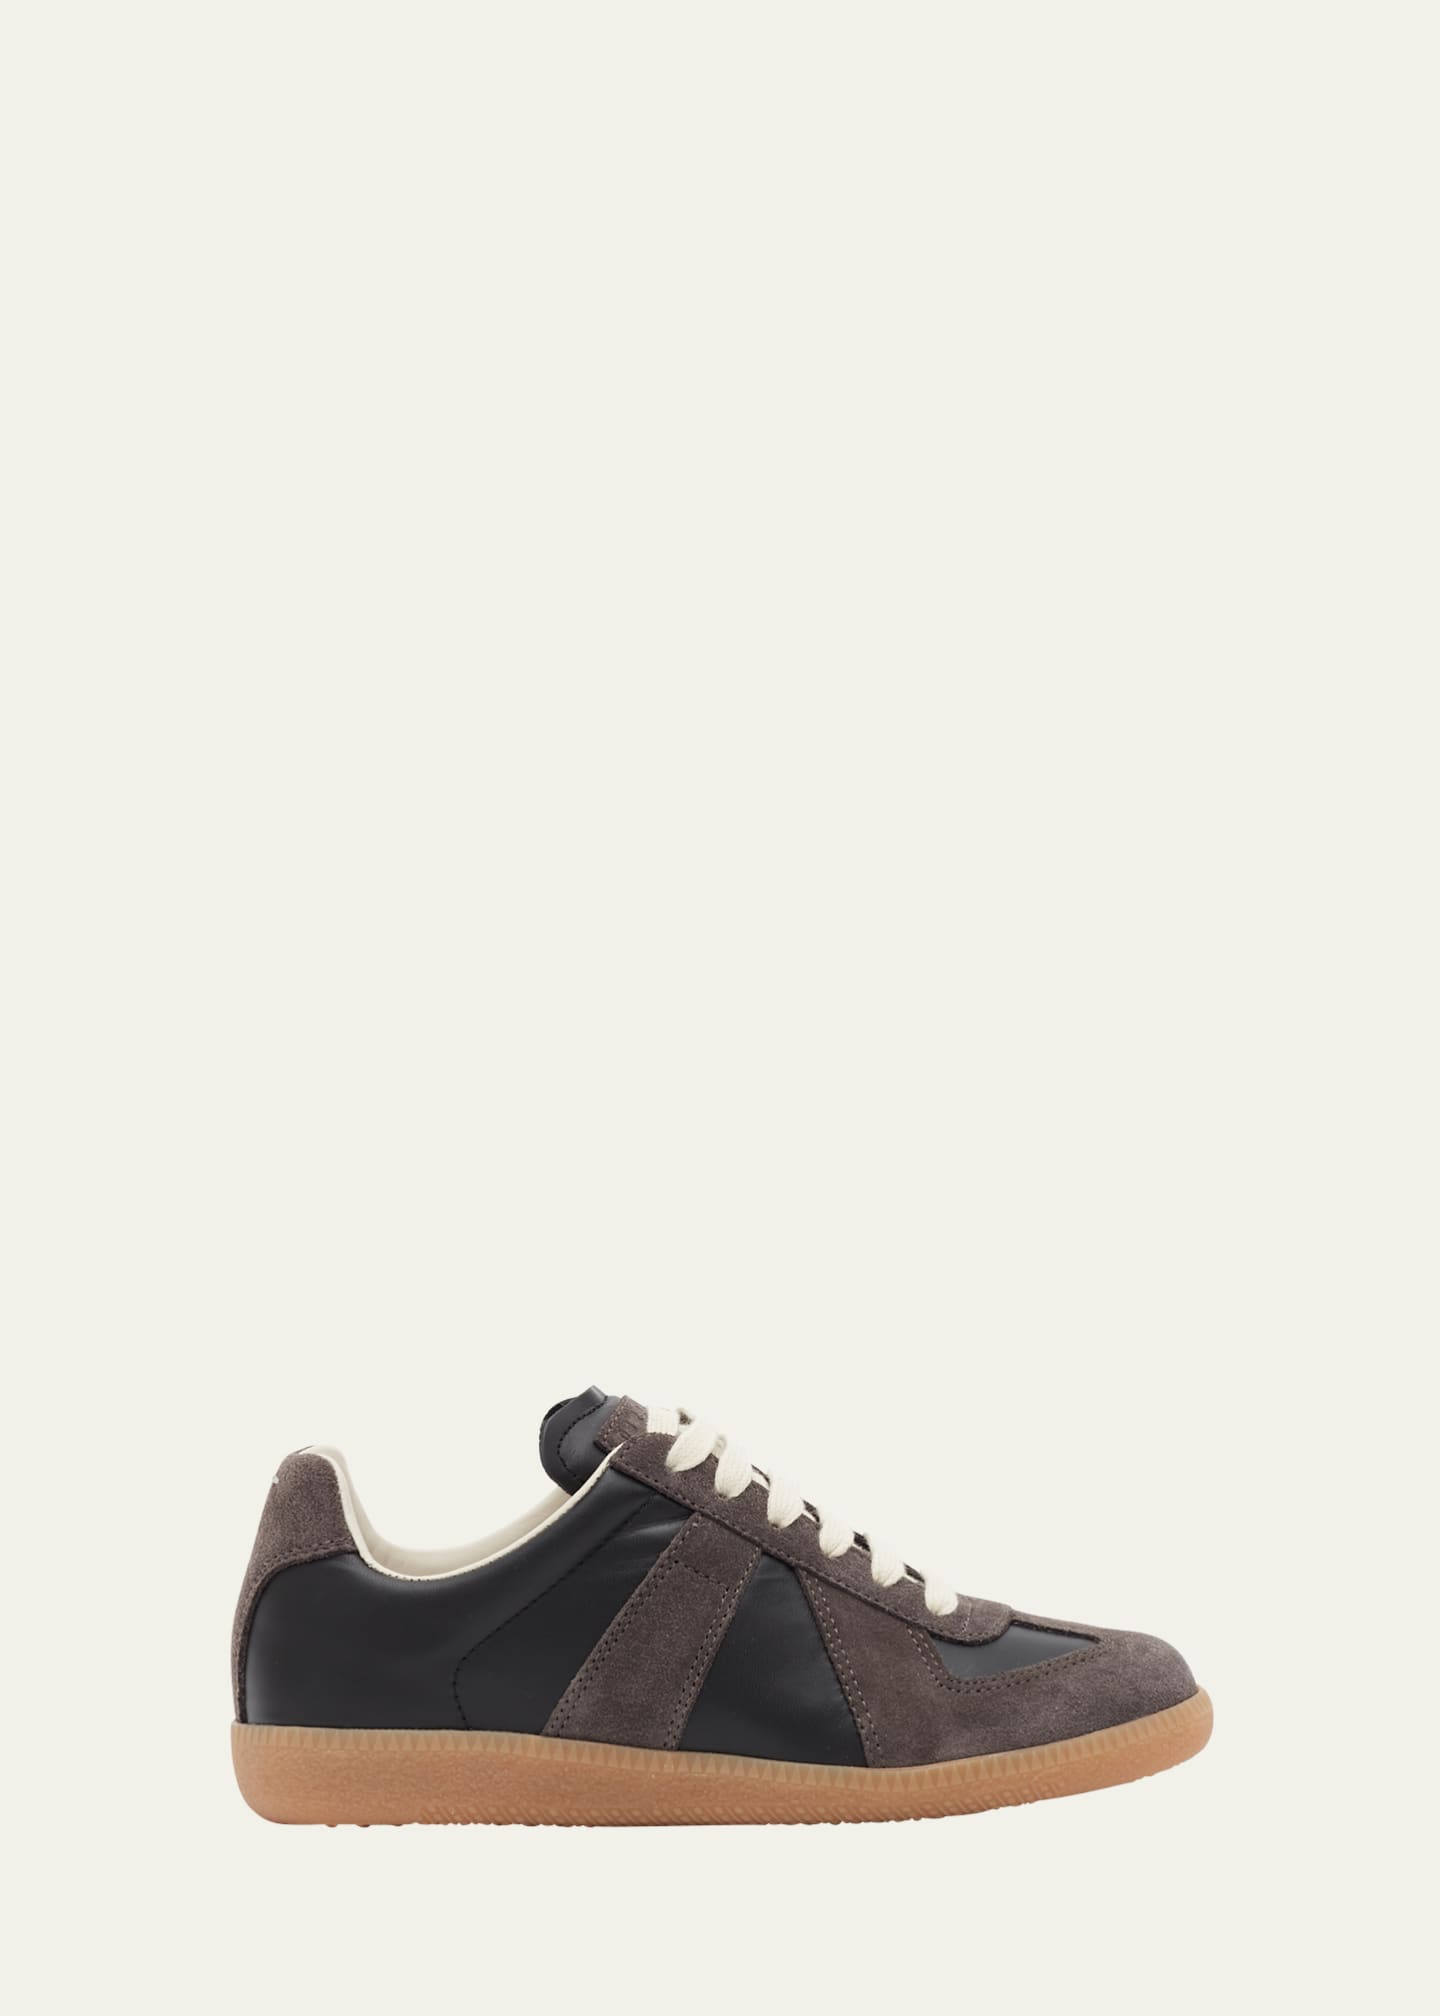 Maison Margiela Replica Suede & Leather Sneakers - Bergdorf Goodman